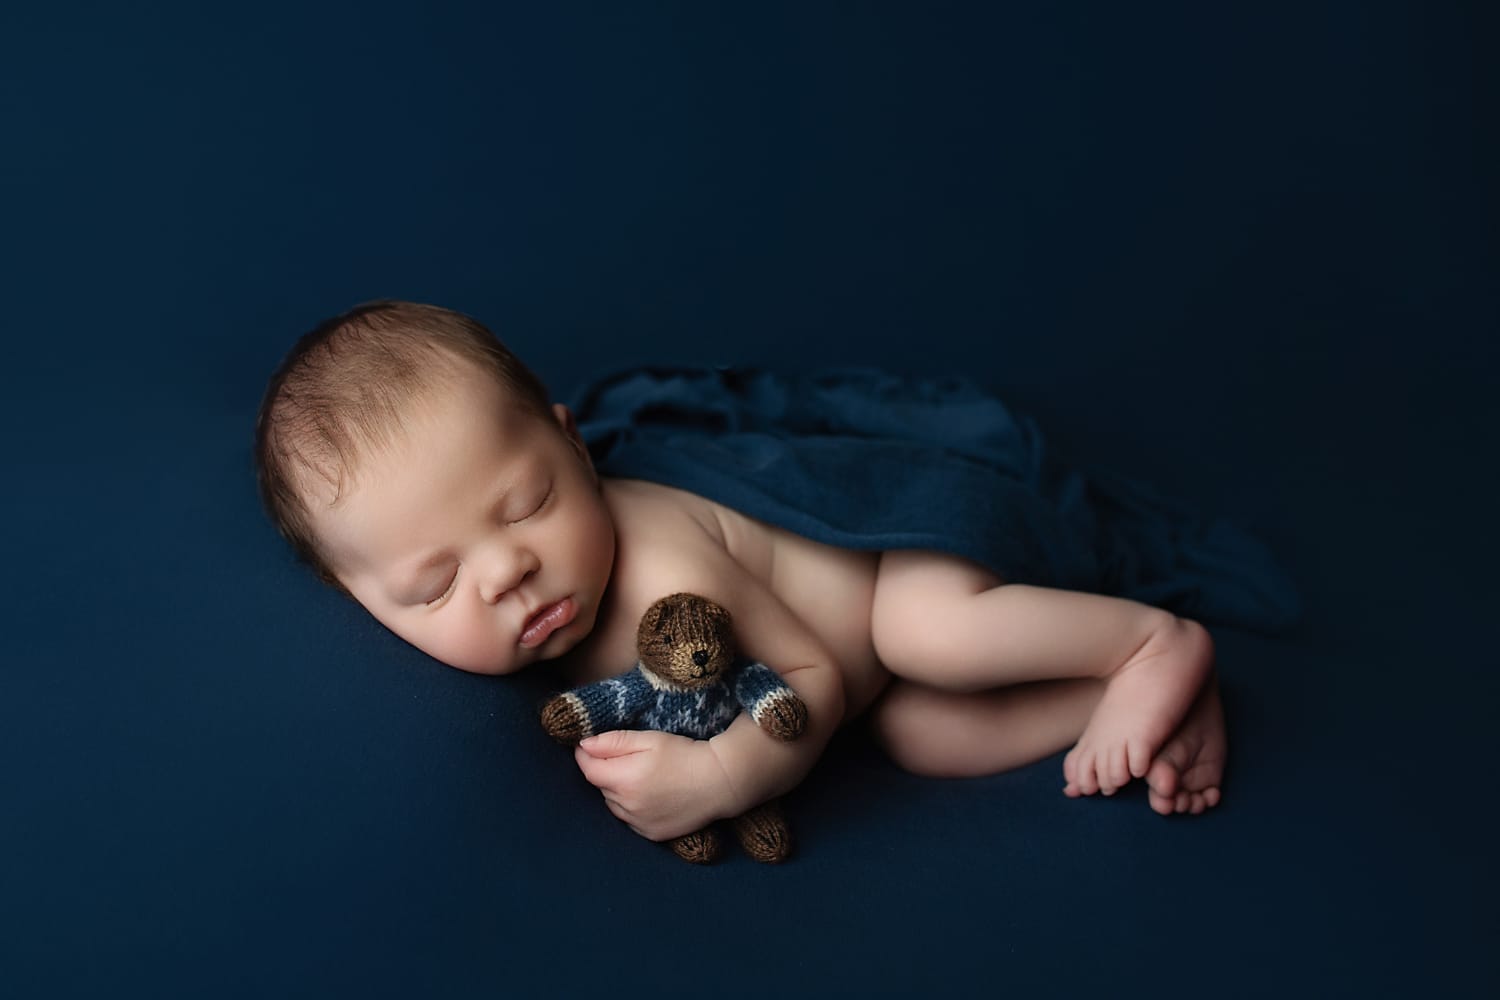 A newborn baby sleeps under a blue blanket holding a small knit bear